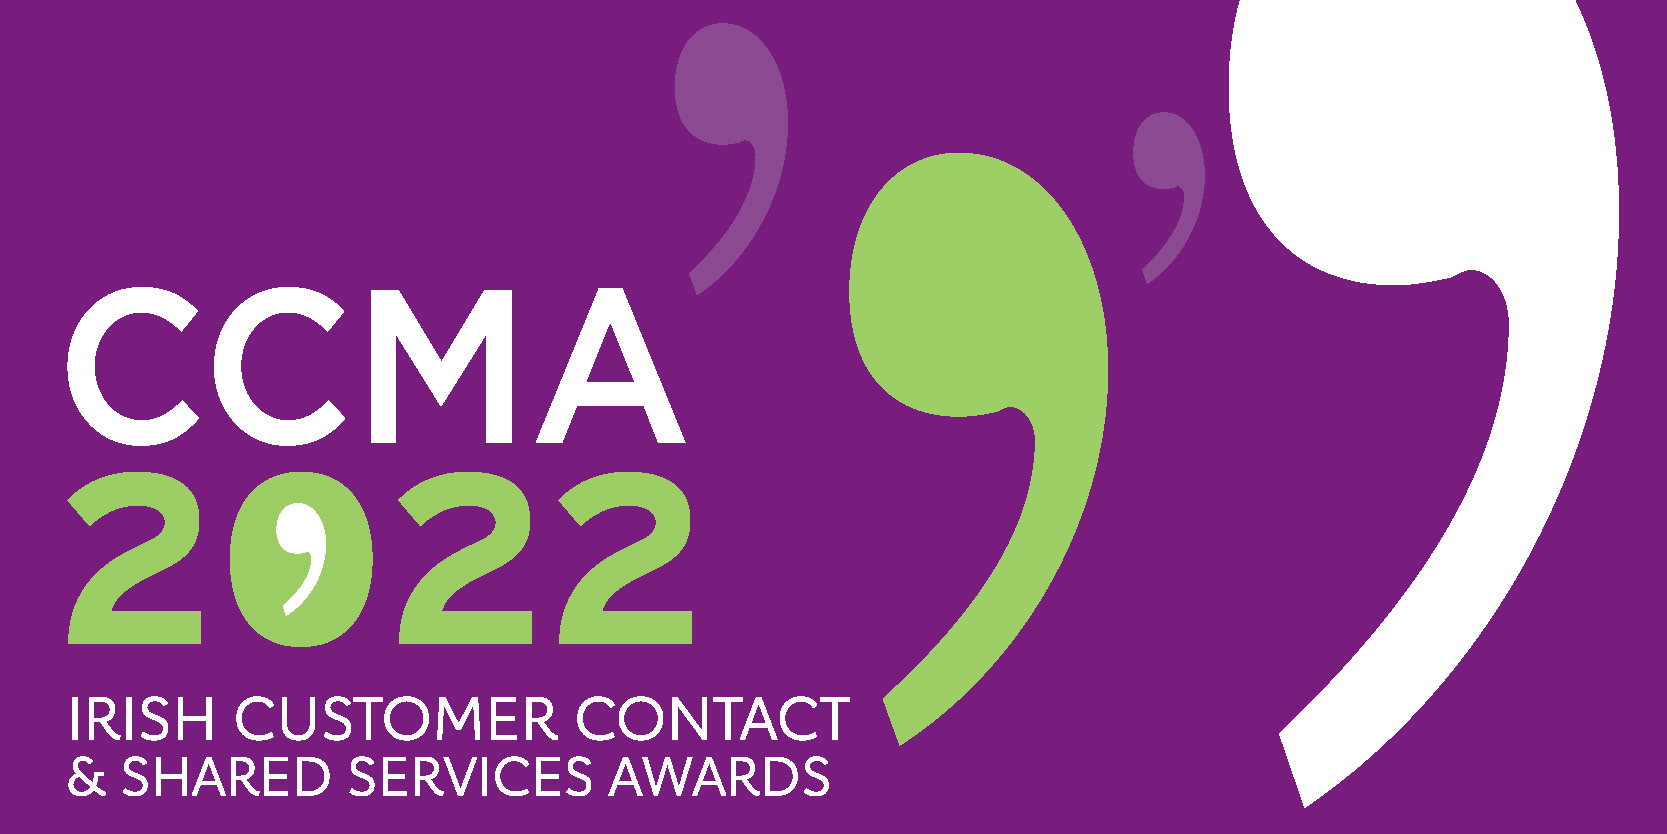 CCMA Irish Customer Contact & Shared Services Awards 2022 Judges Call 